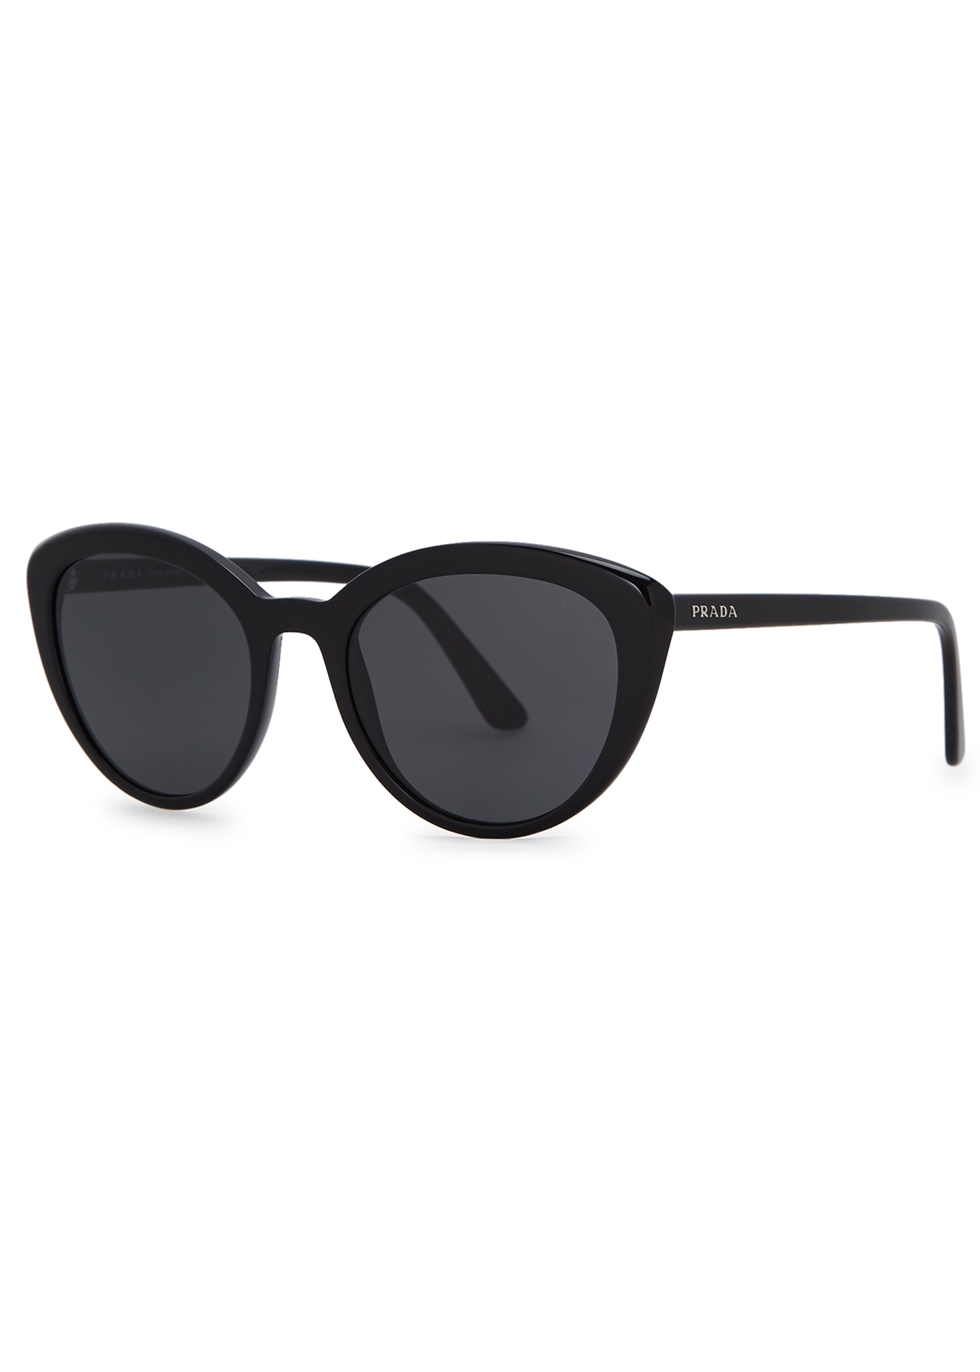 Black cat-eye sunglasses - Harvey Nichols